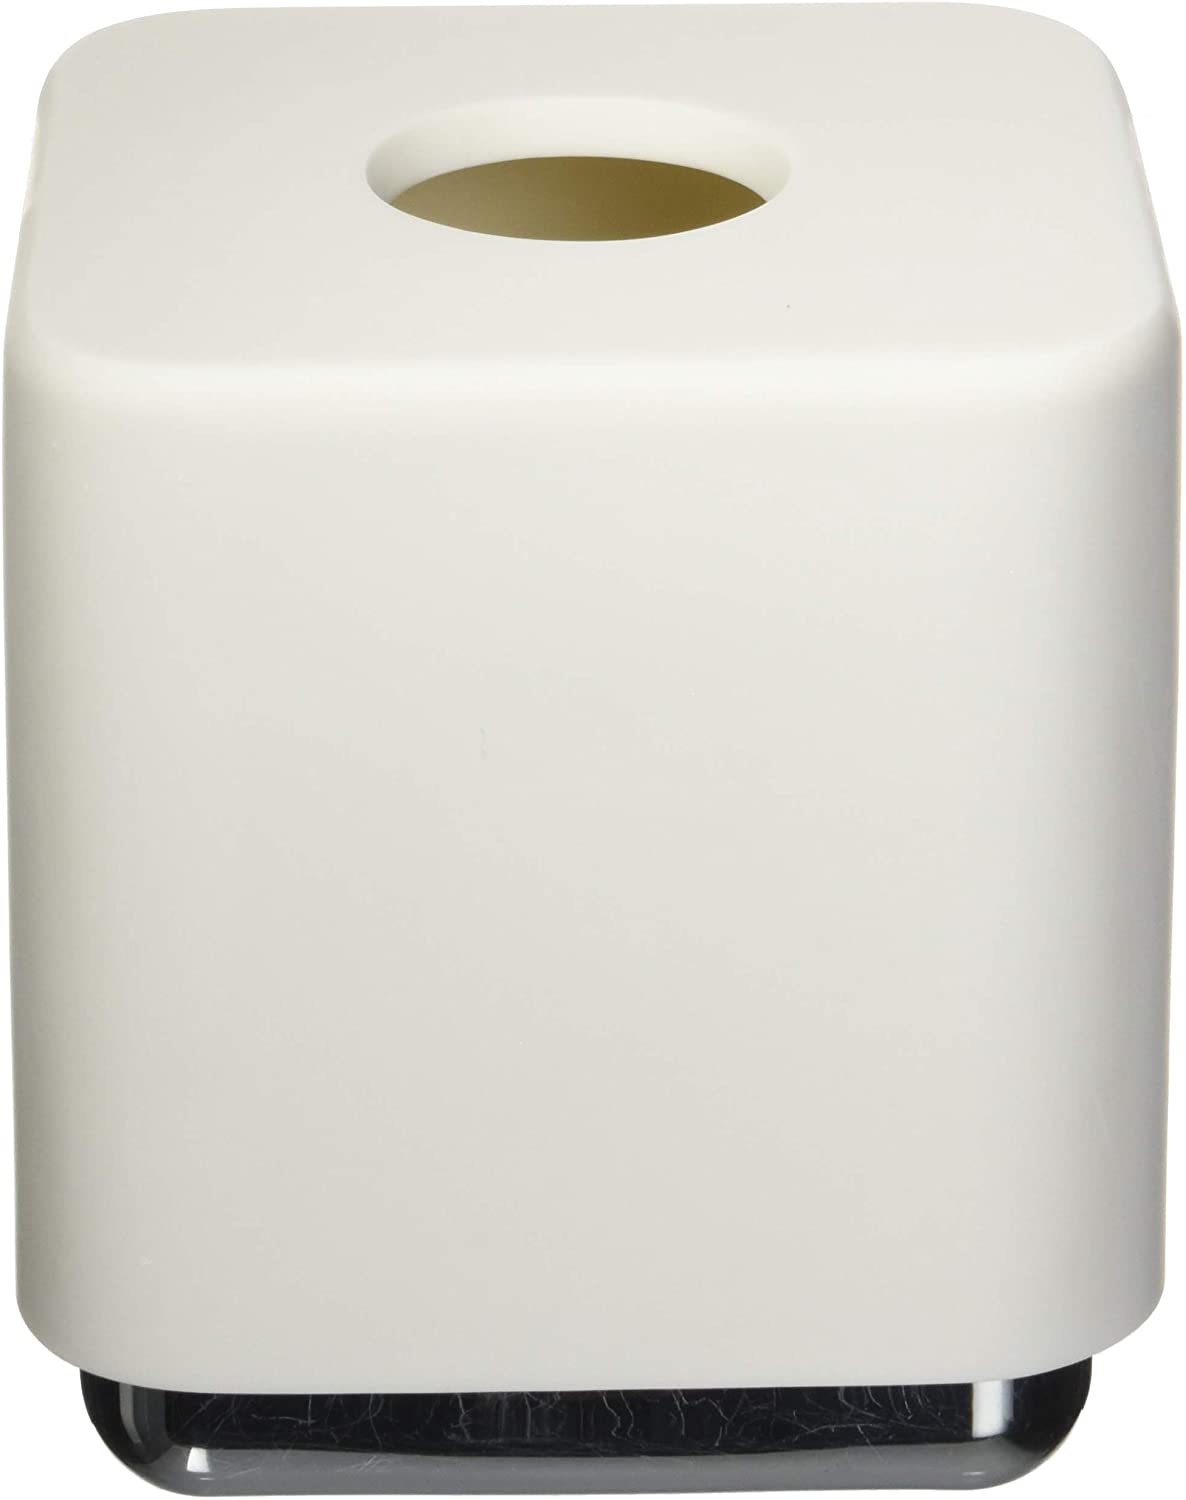 Umbra Junip Tissue Box For Bathroom Use – Modern And Elegant Tissue Box Mad